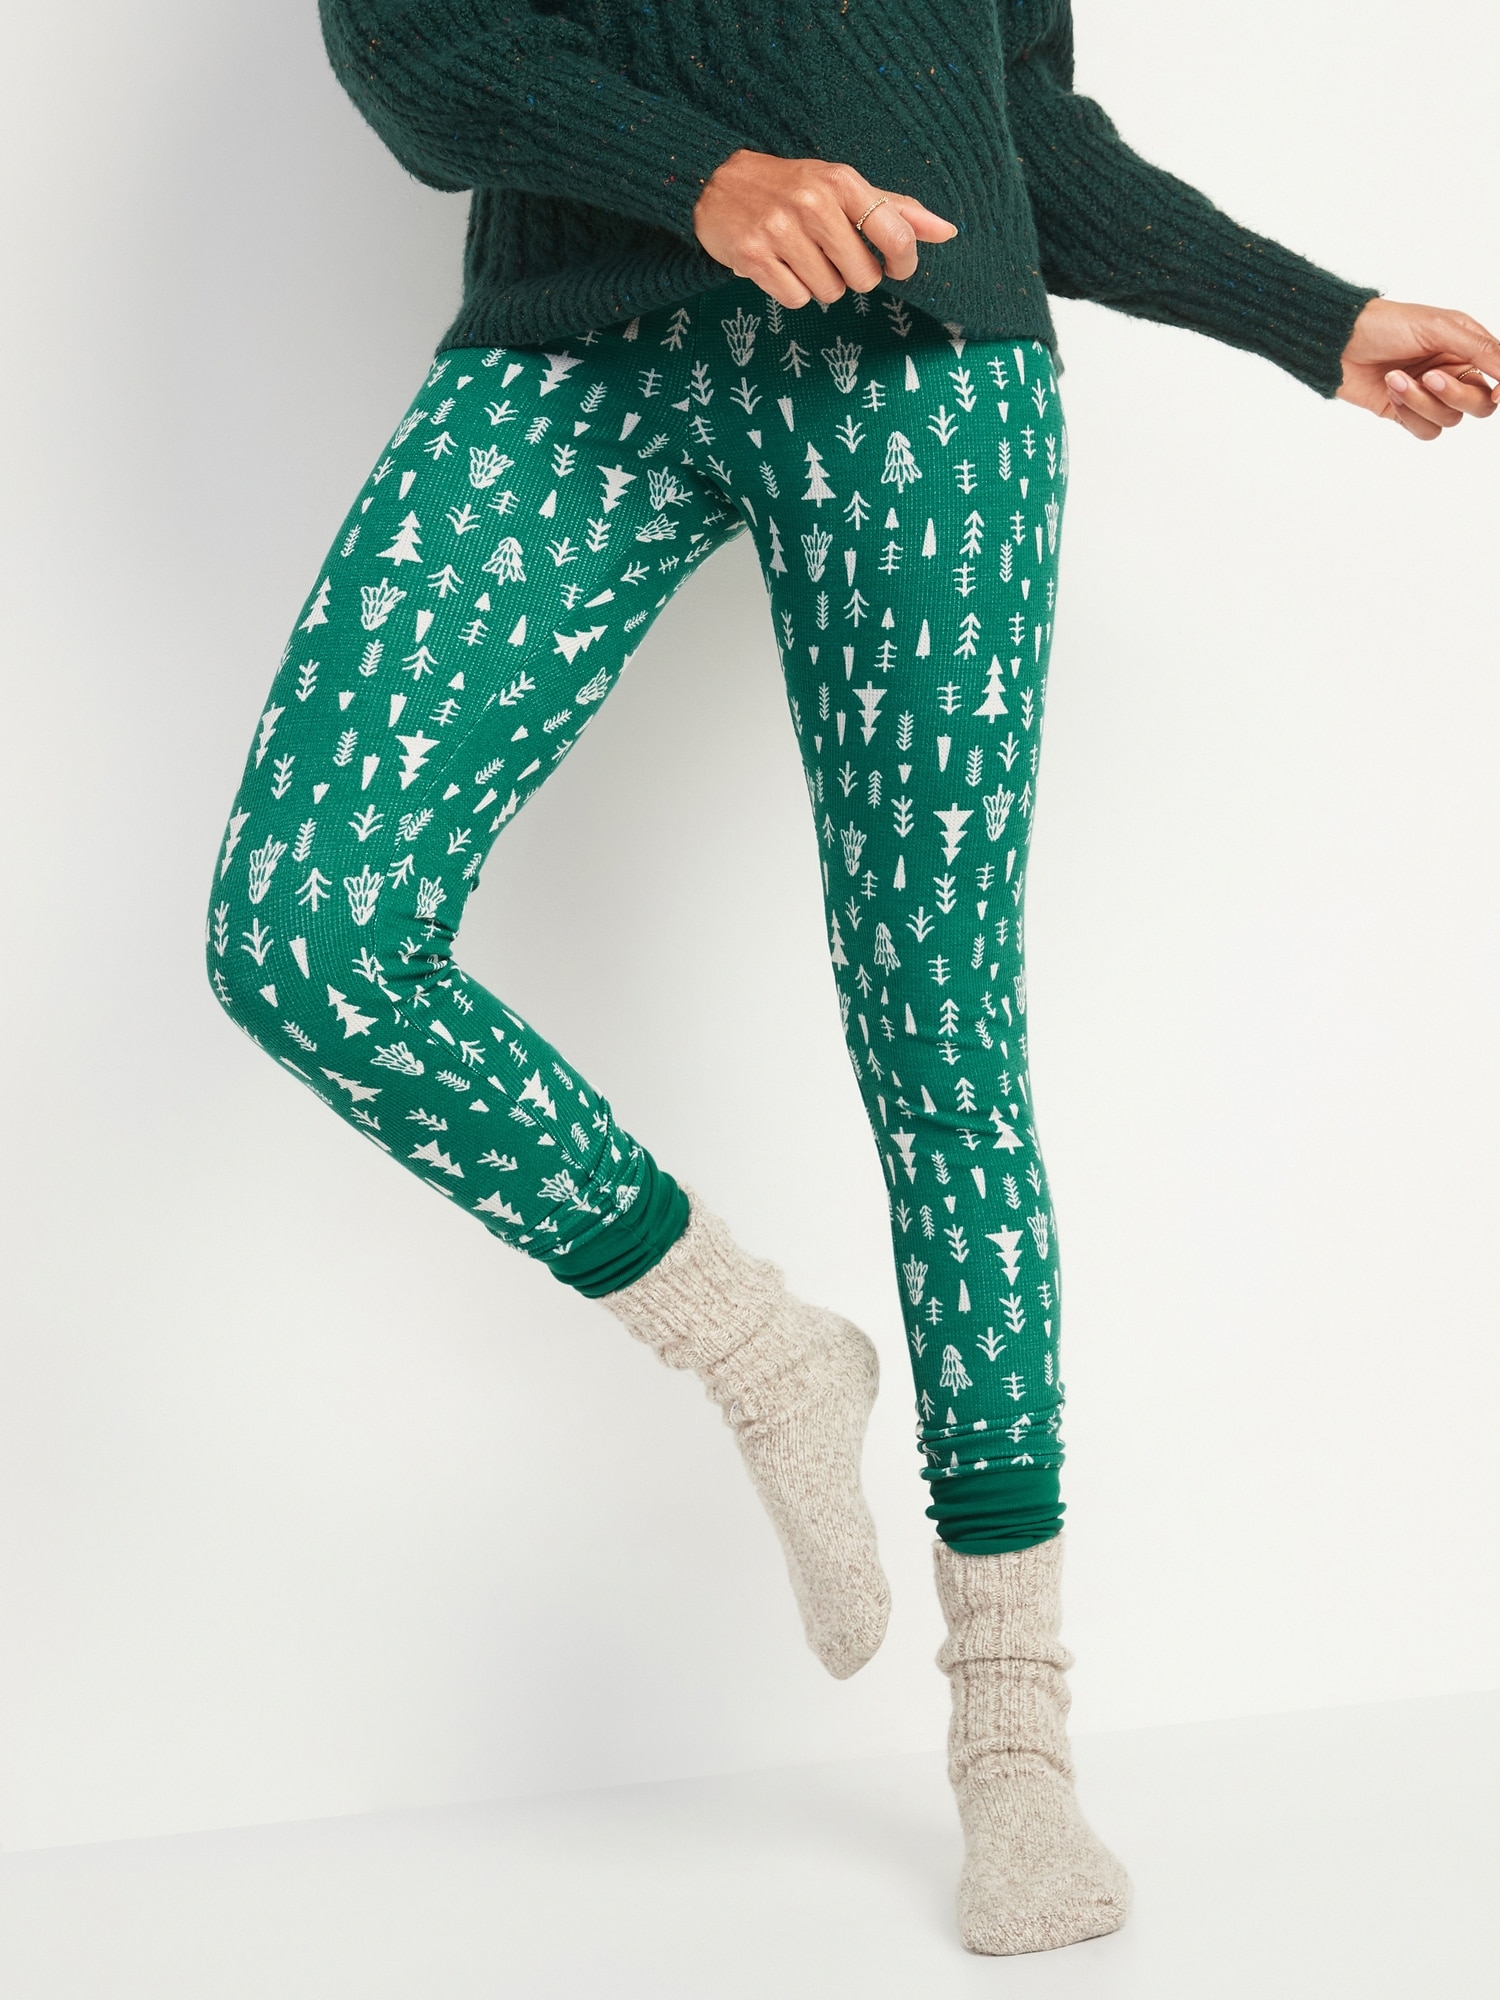 Matching Printed Thermal-Knit Pajama Leggings for Women, Old Navy